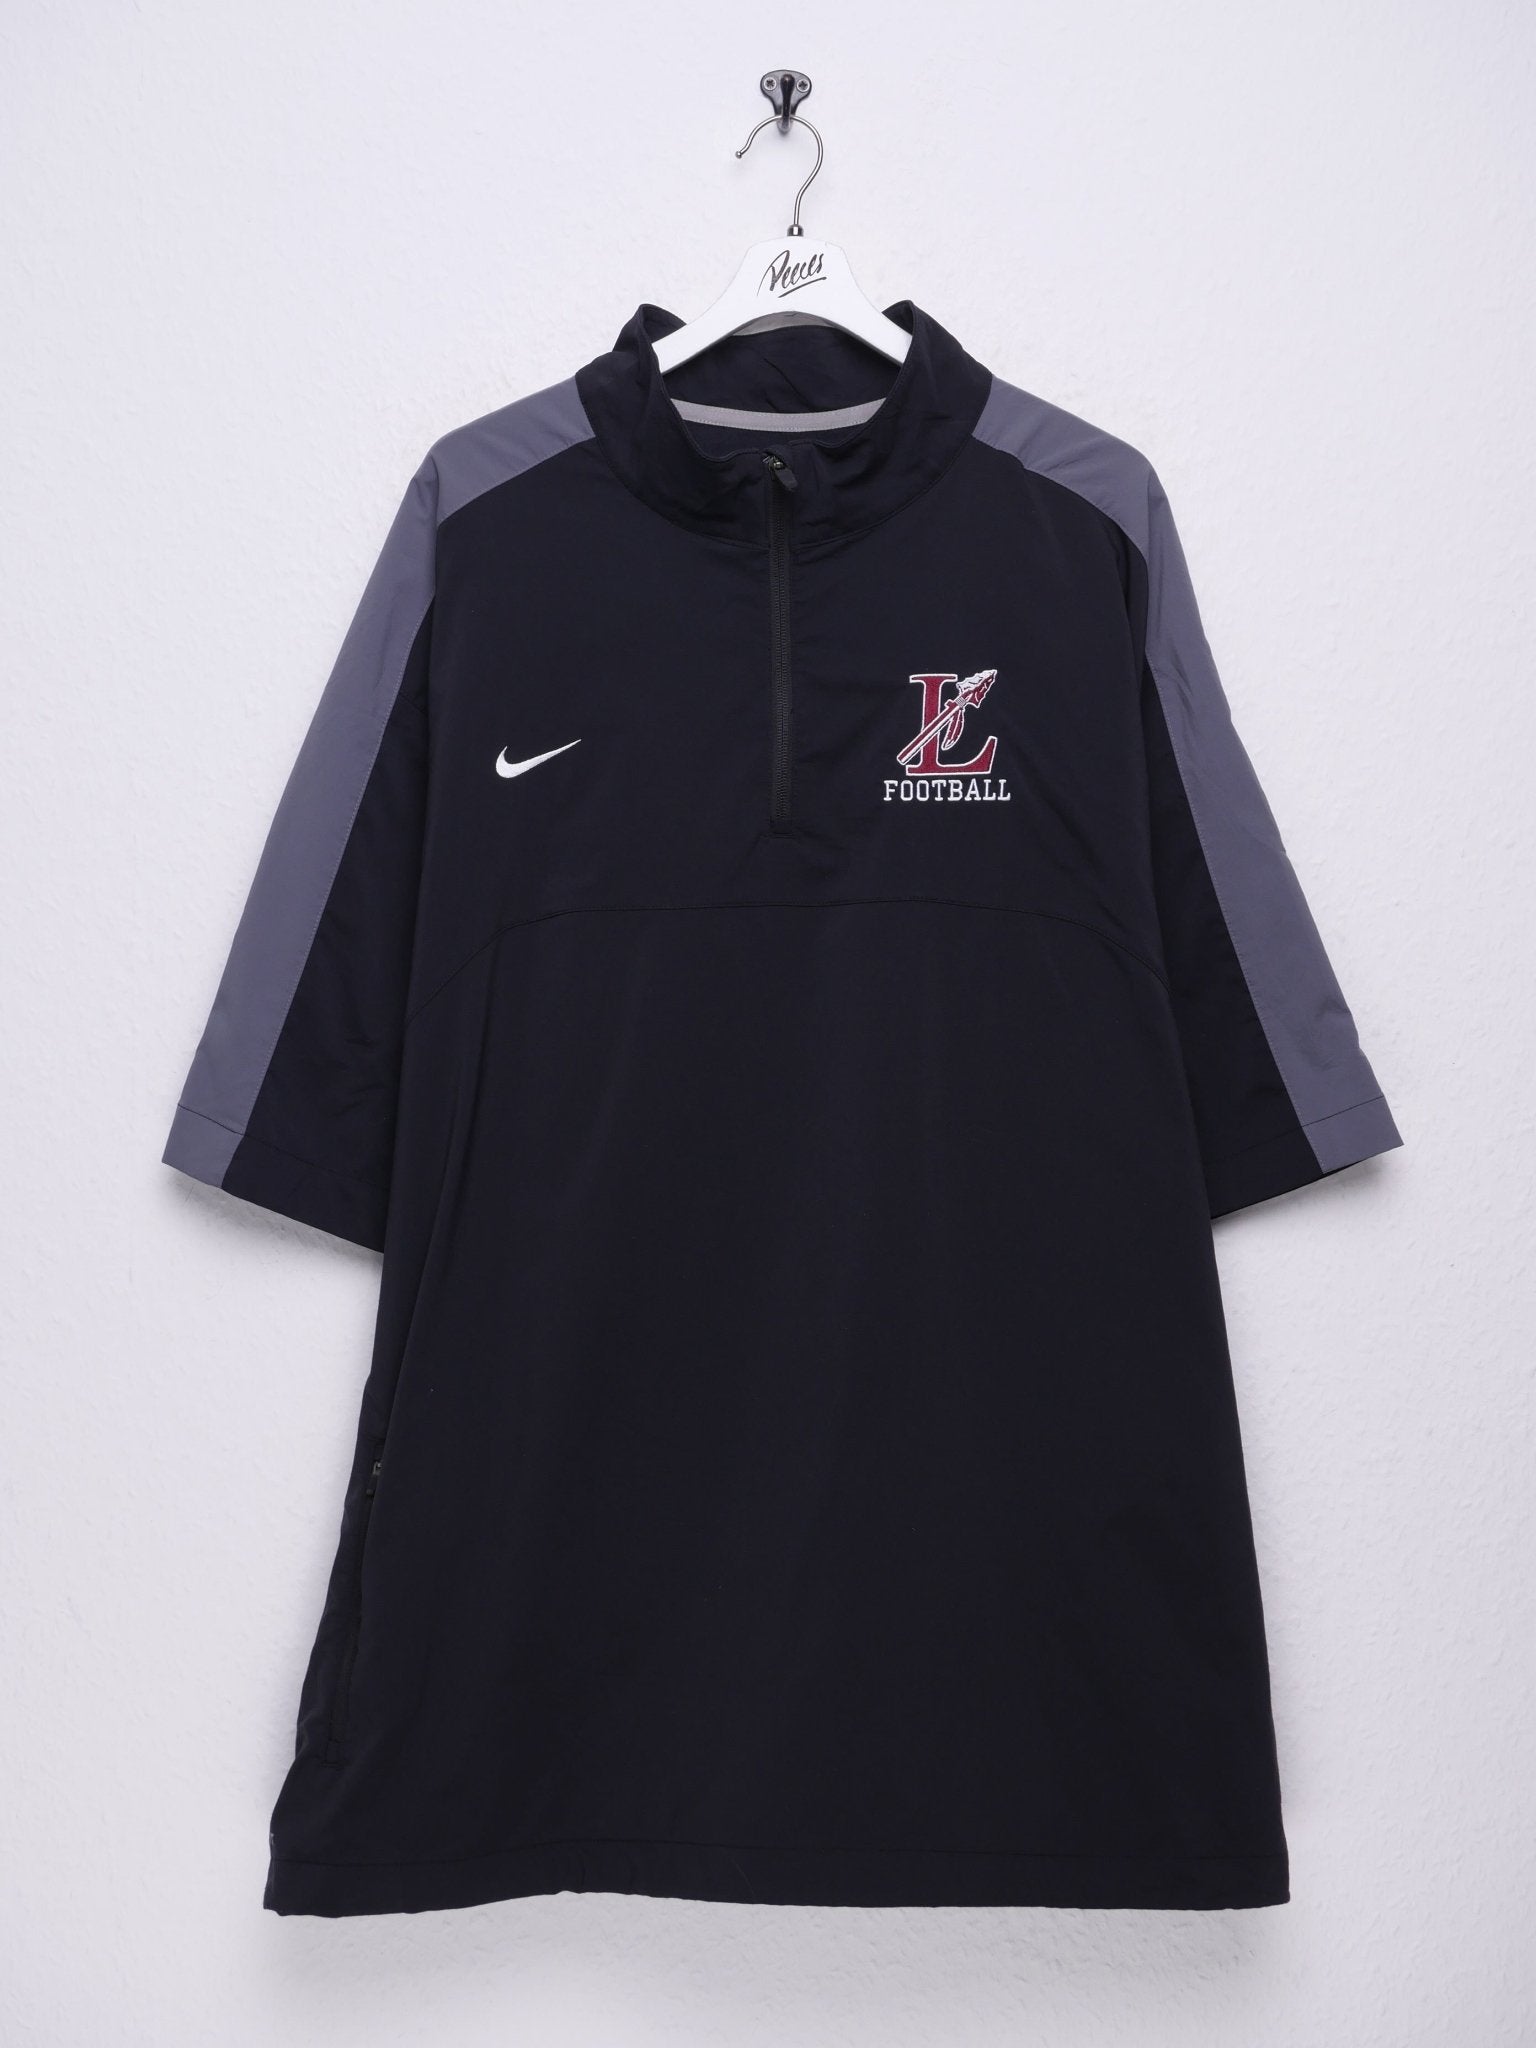 Nike embroidered Football Logo Vintage Half Zip Jersey Shirt - Peeces